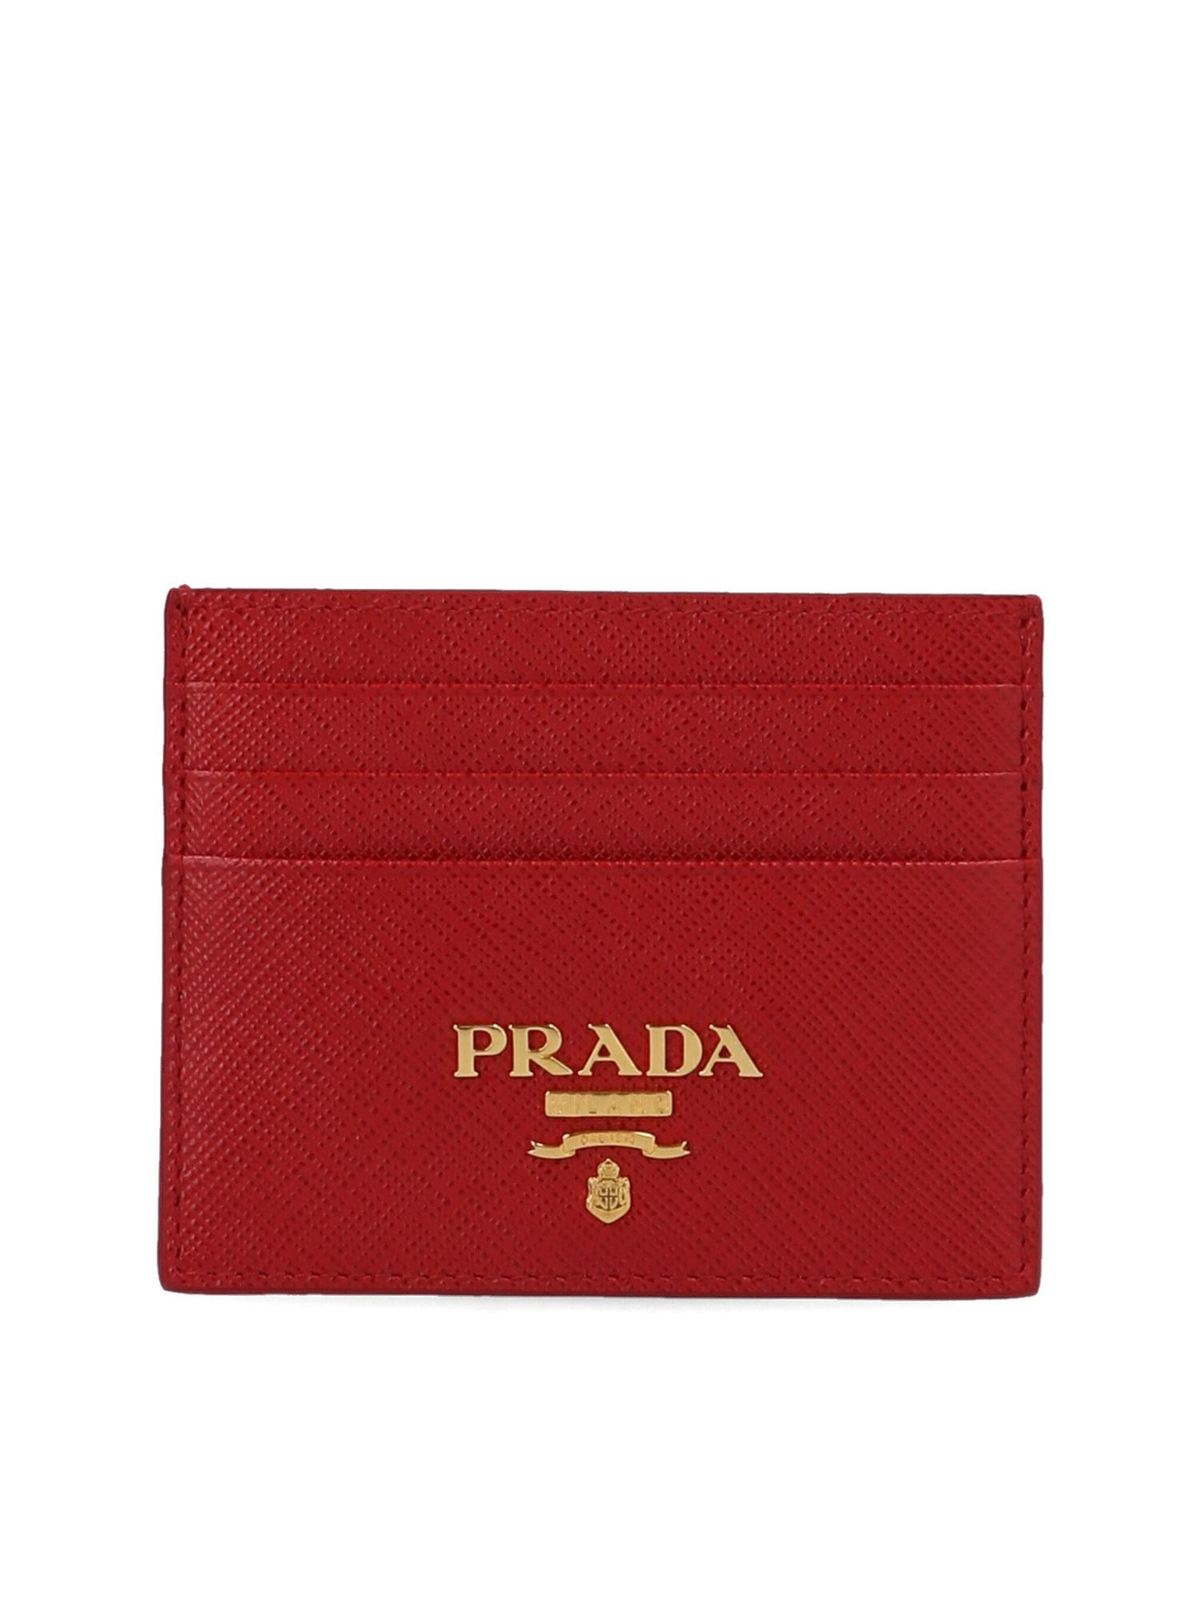 prada red wallet